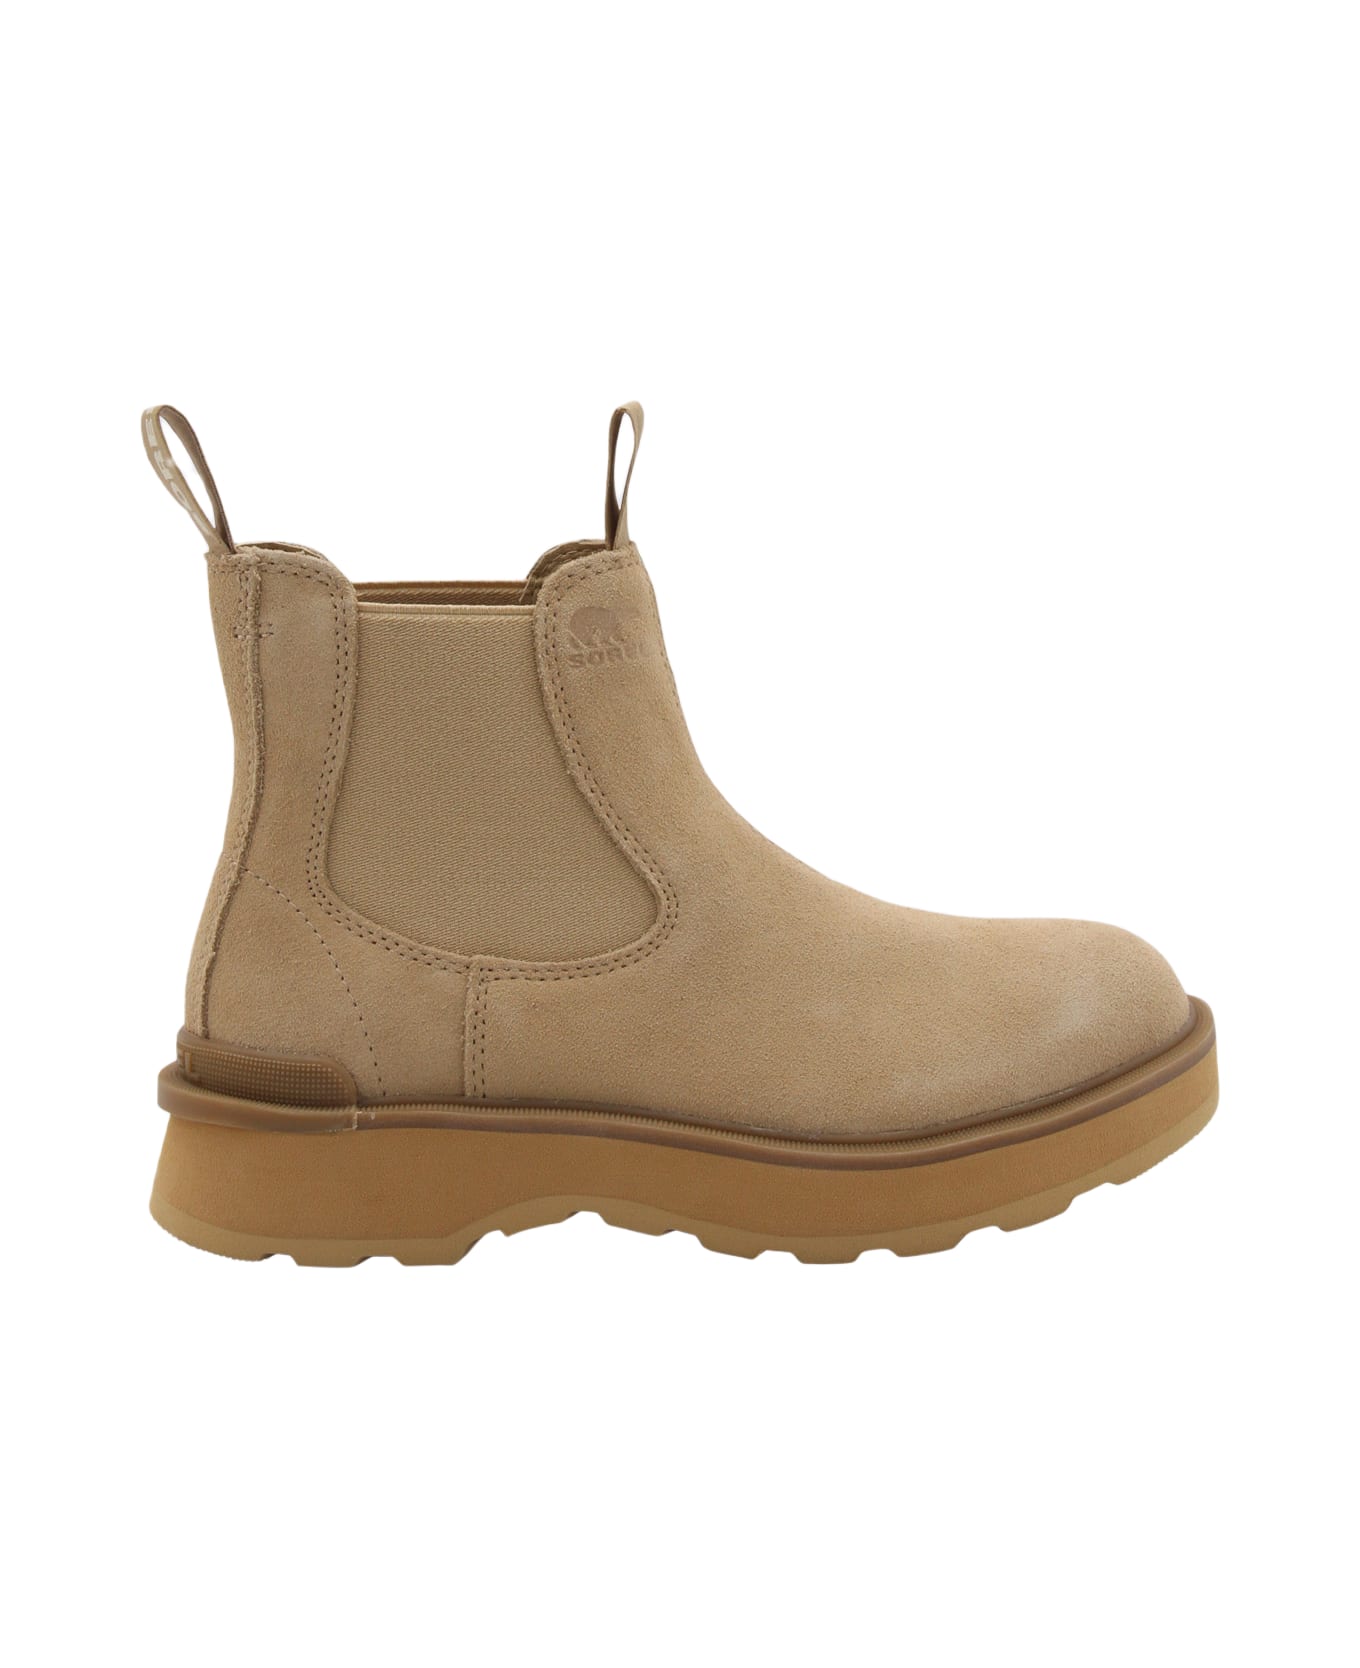 Sorel Beige Leather Chelsea Boots - CANOE/CERAMIC